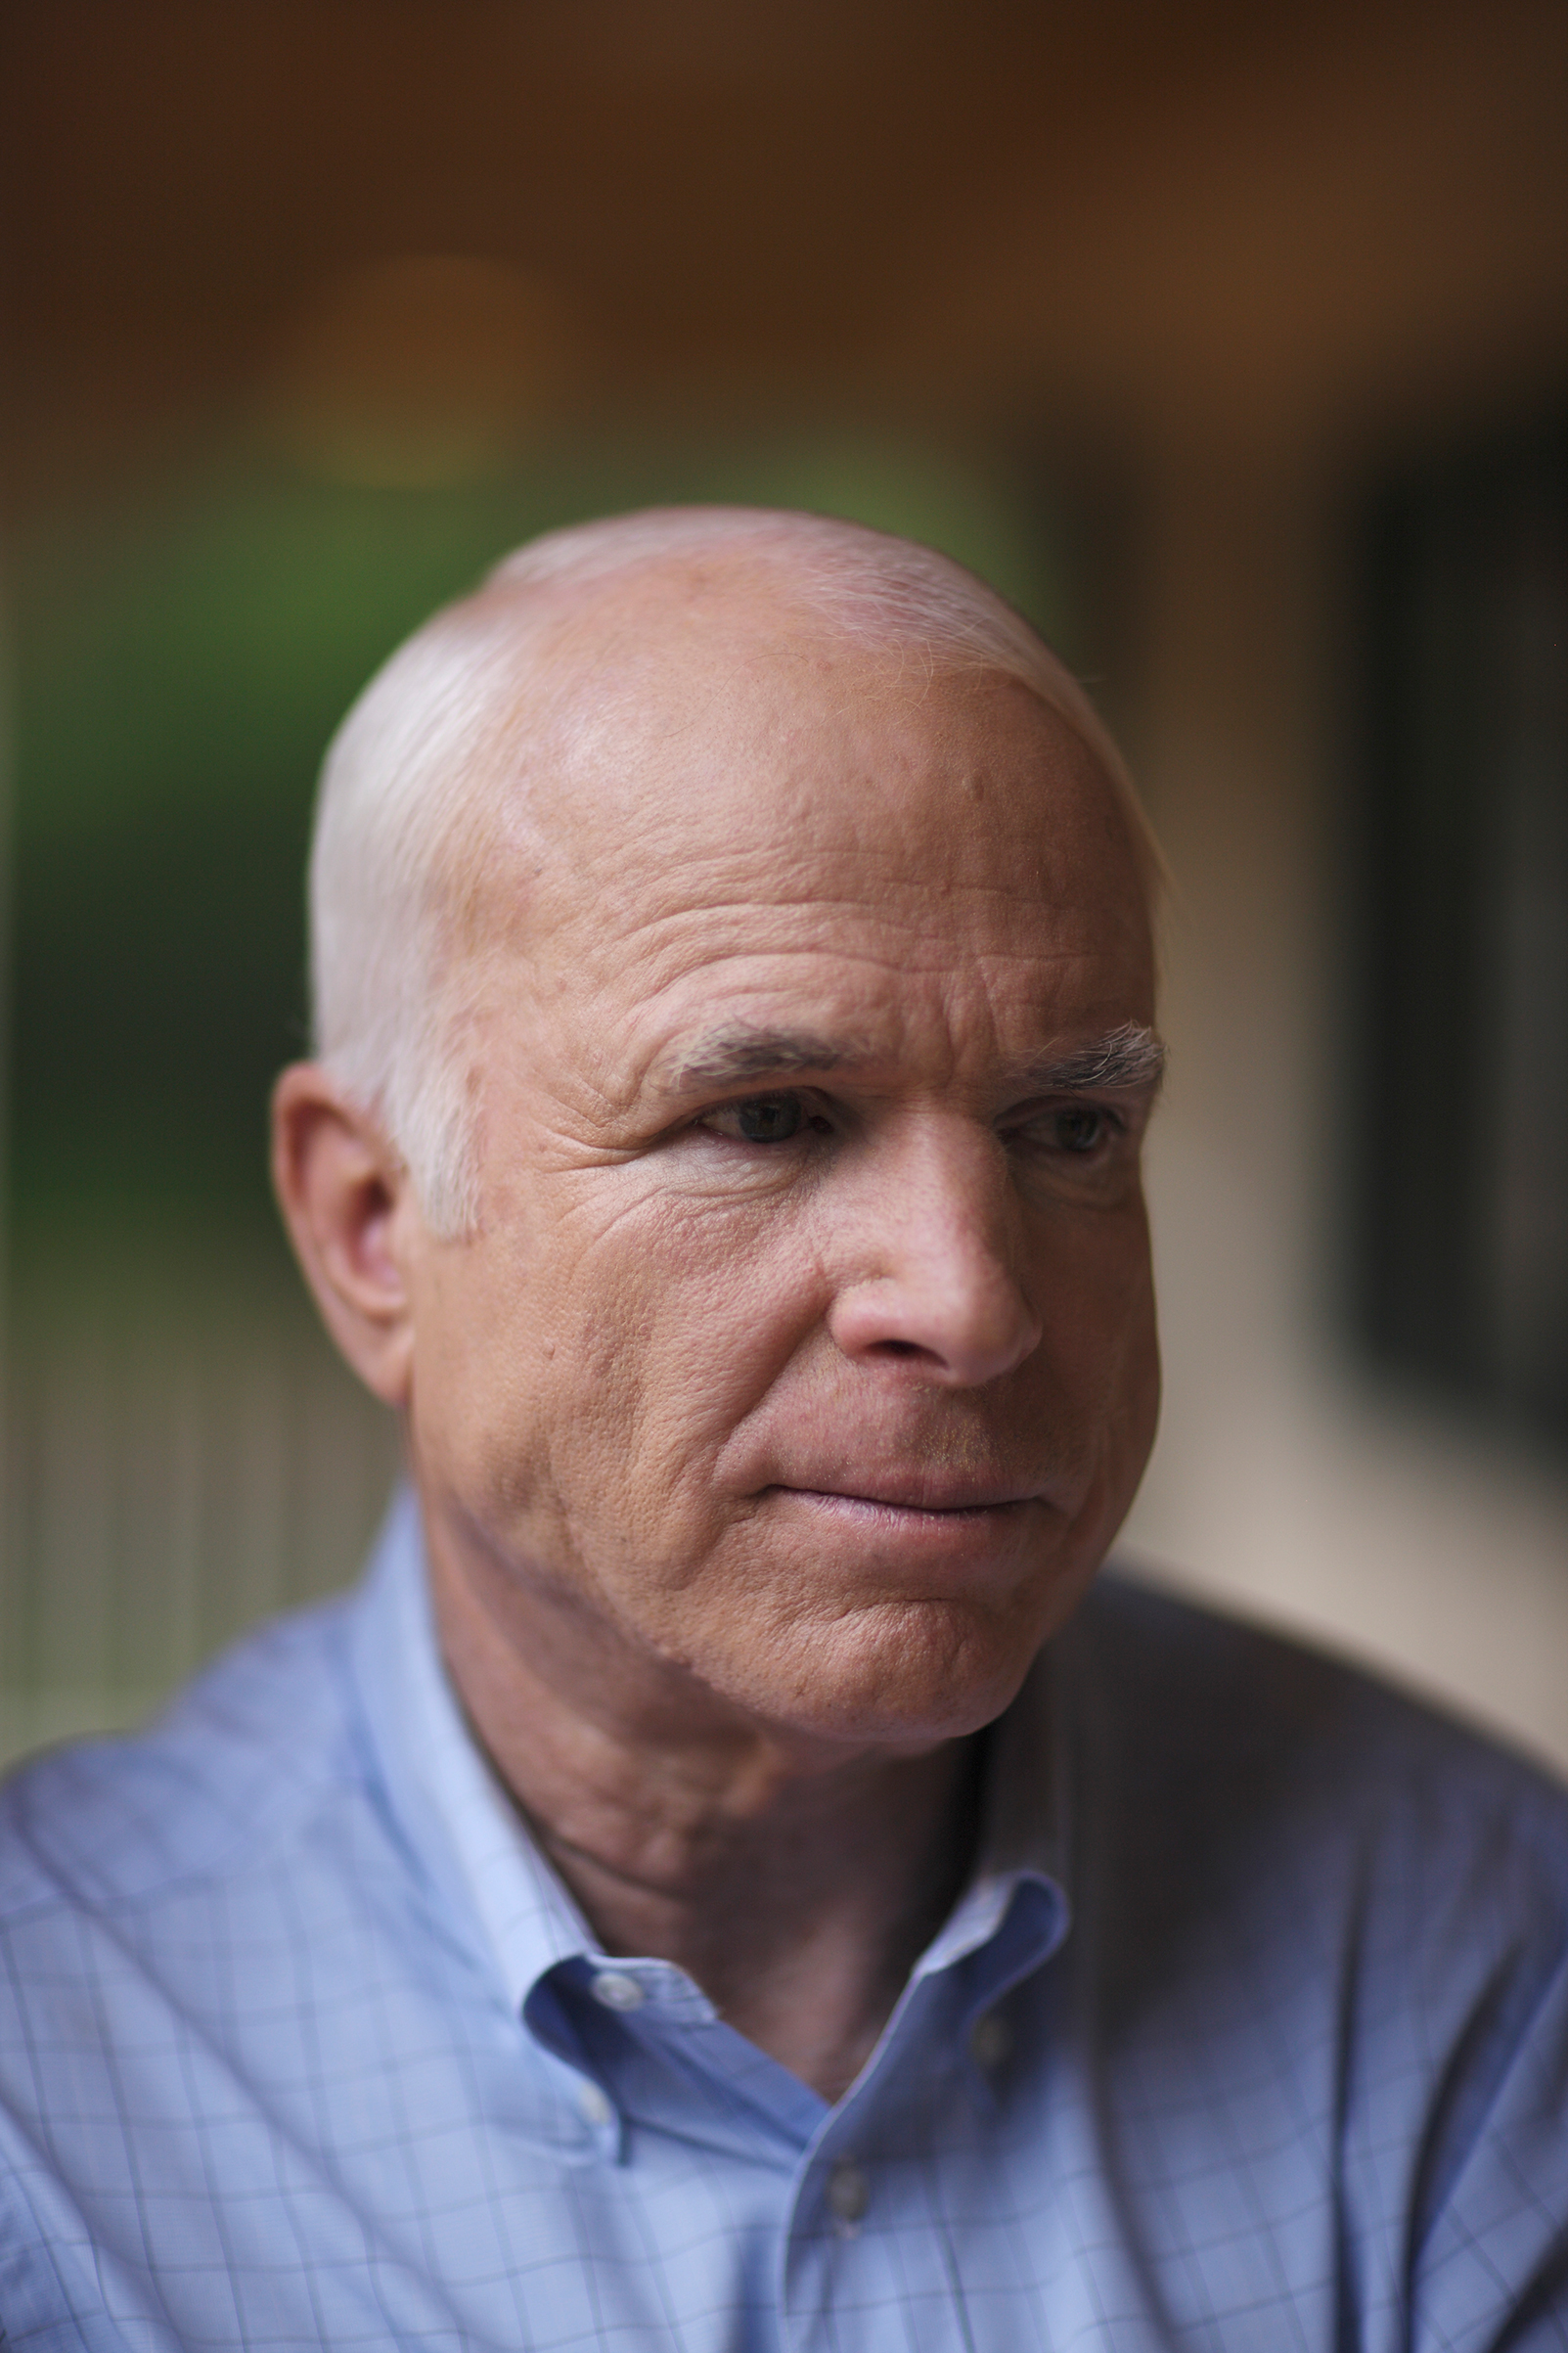 John McCain at his ranch outside Sedona, Arizona on August 23, 2008. (Christopher Morris—VII for TIME Sen.)